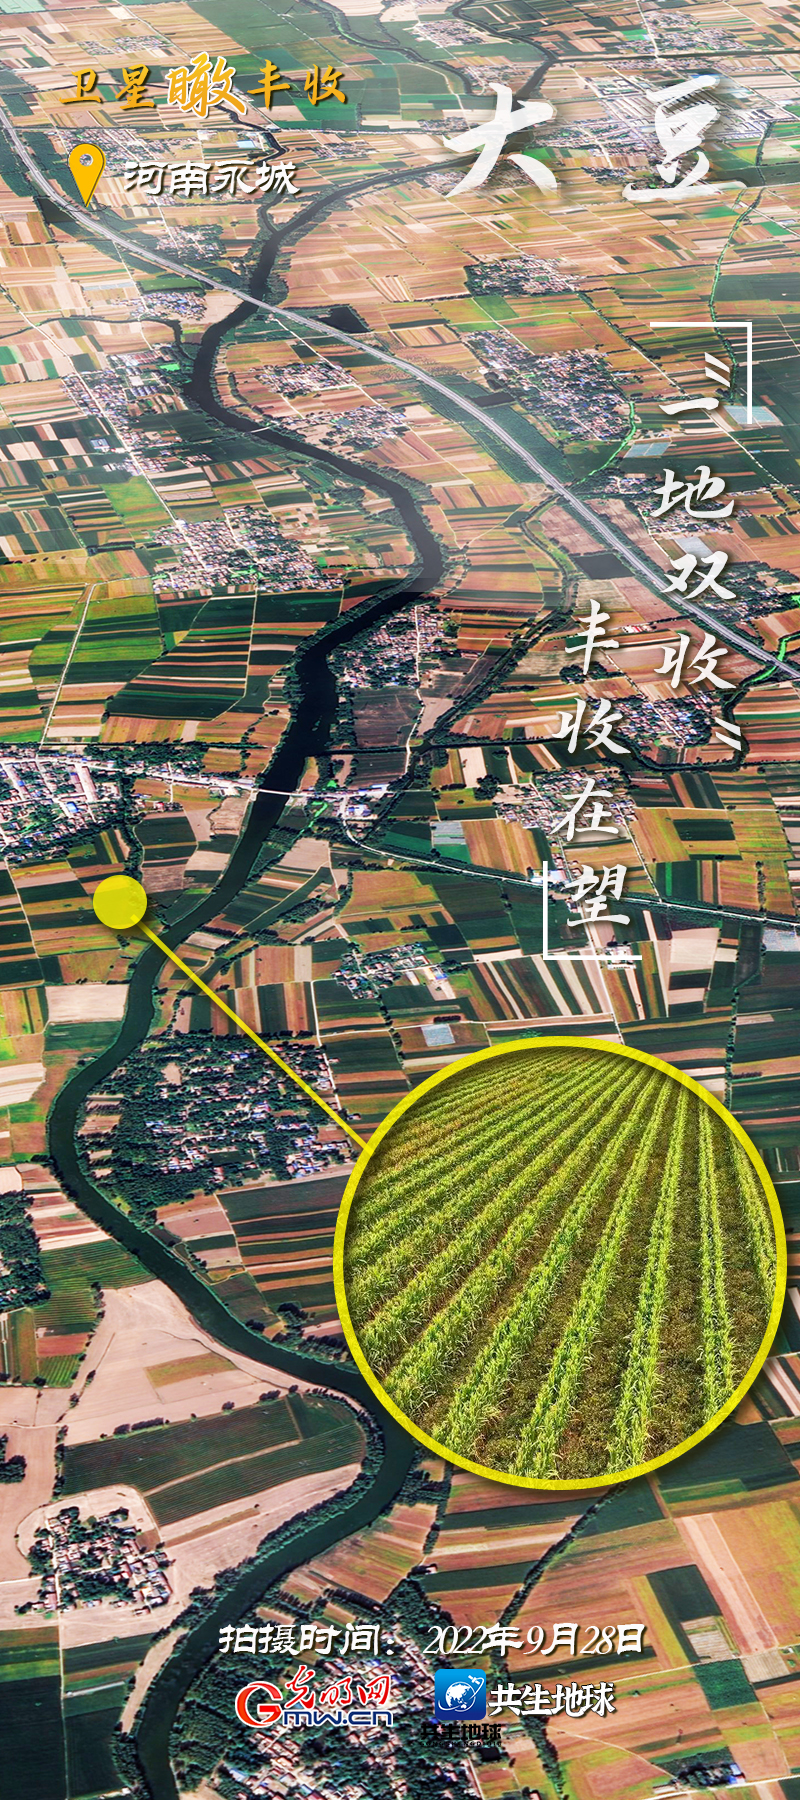 【3D卫星】丨保障粮食供给 在希望的田野上丰收耕耘